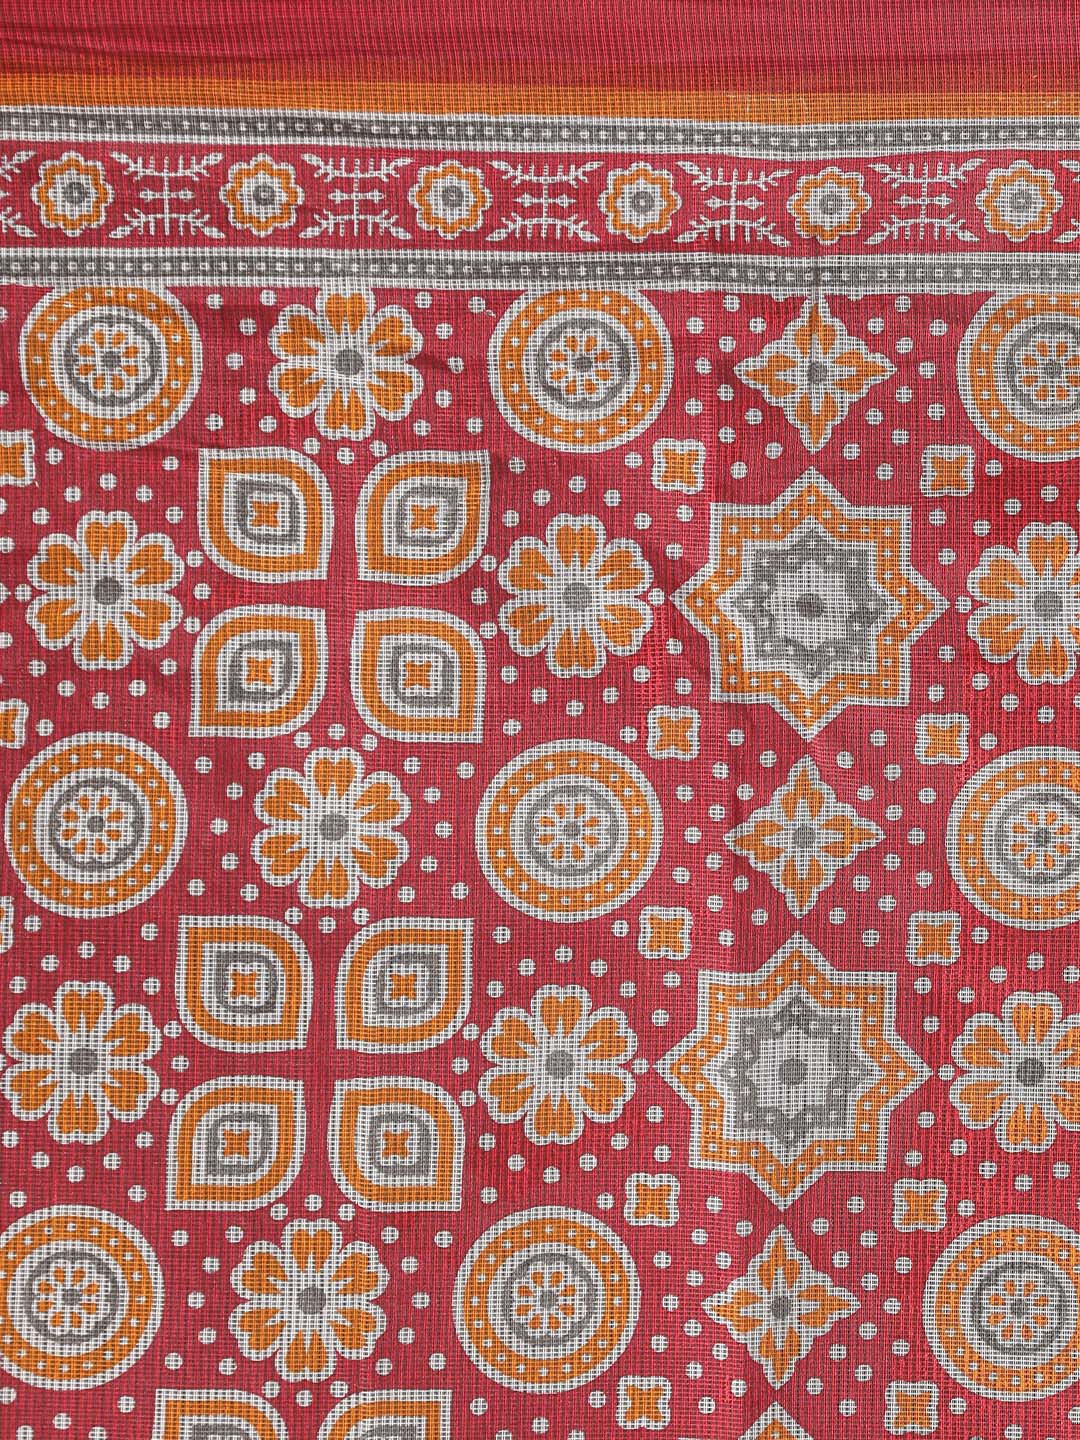 Indethnic Printed Super Net Saree in Maroon - Saree Detail View